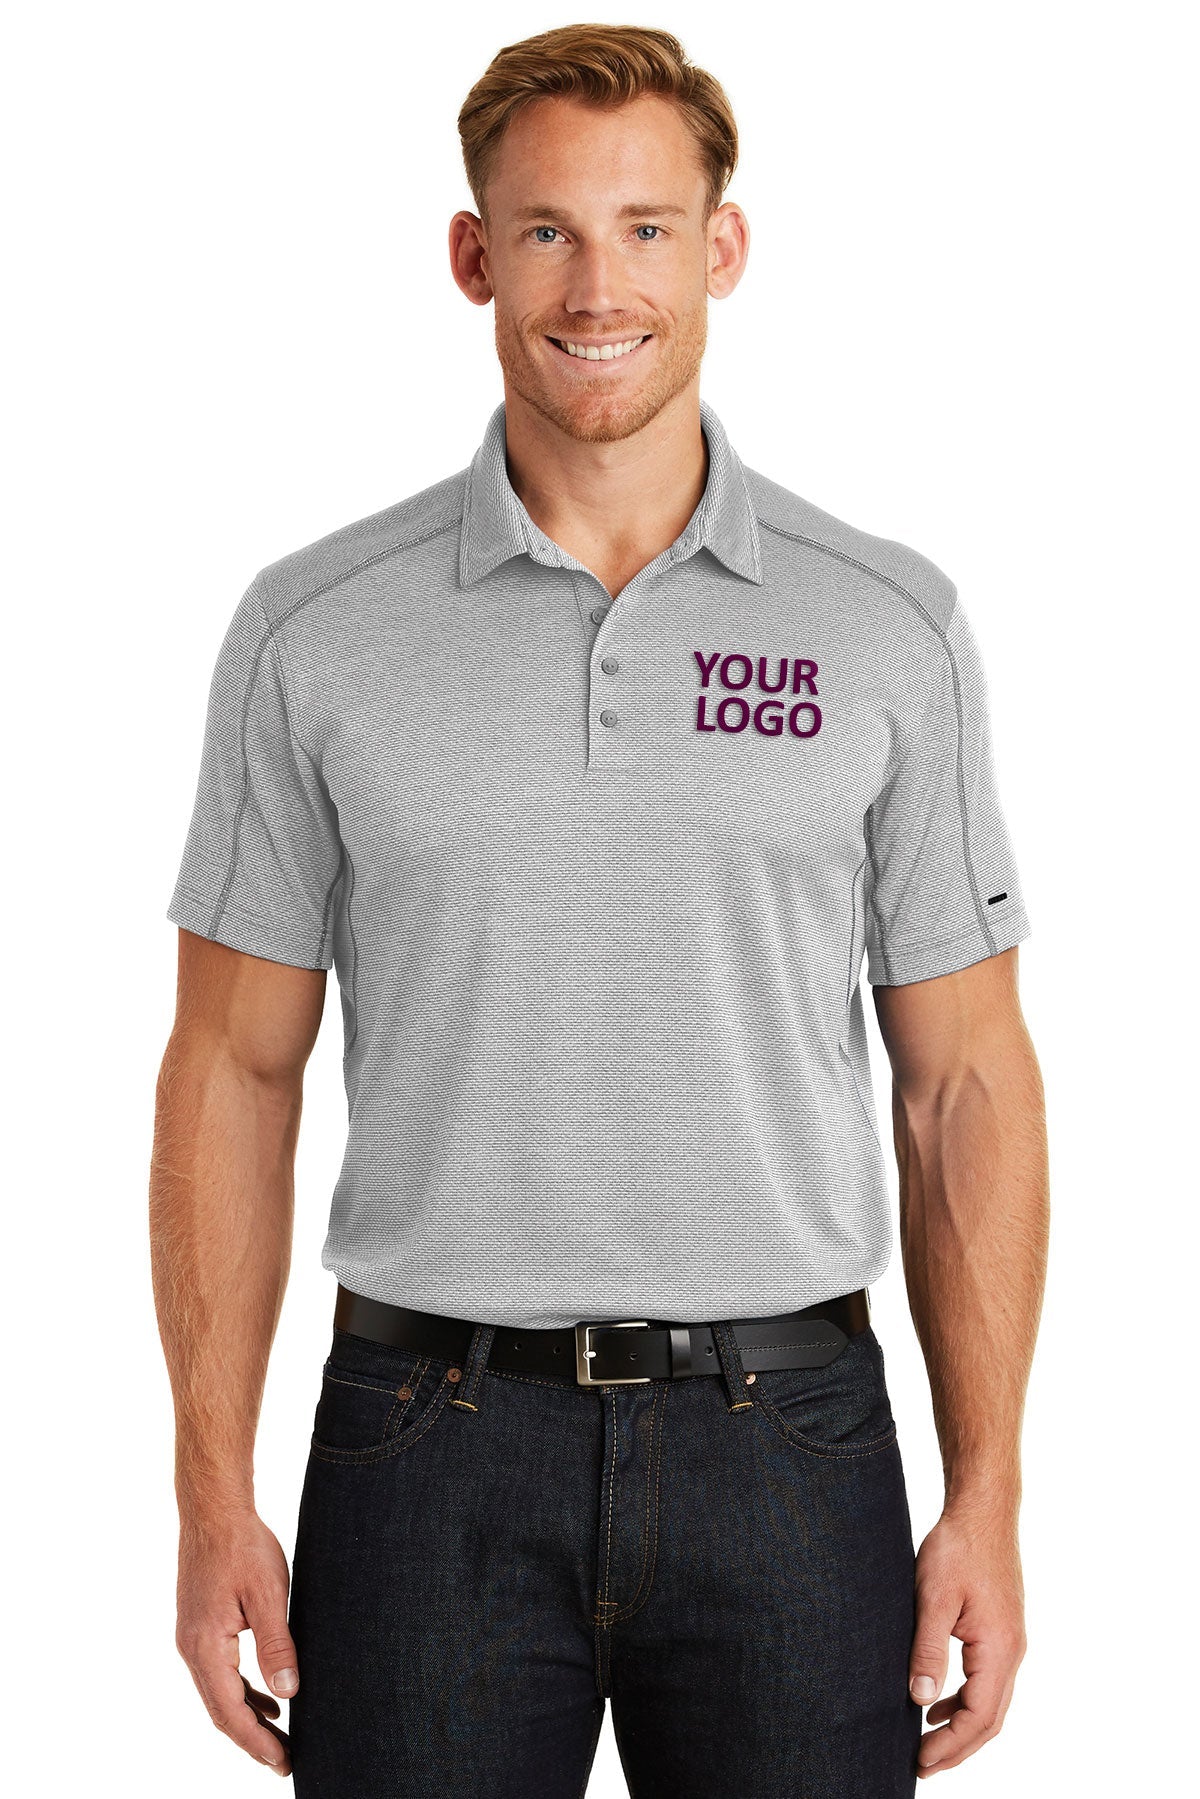 OGIO Rogue Grey/ White OG133 custom polo shirts dri fit